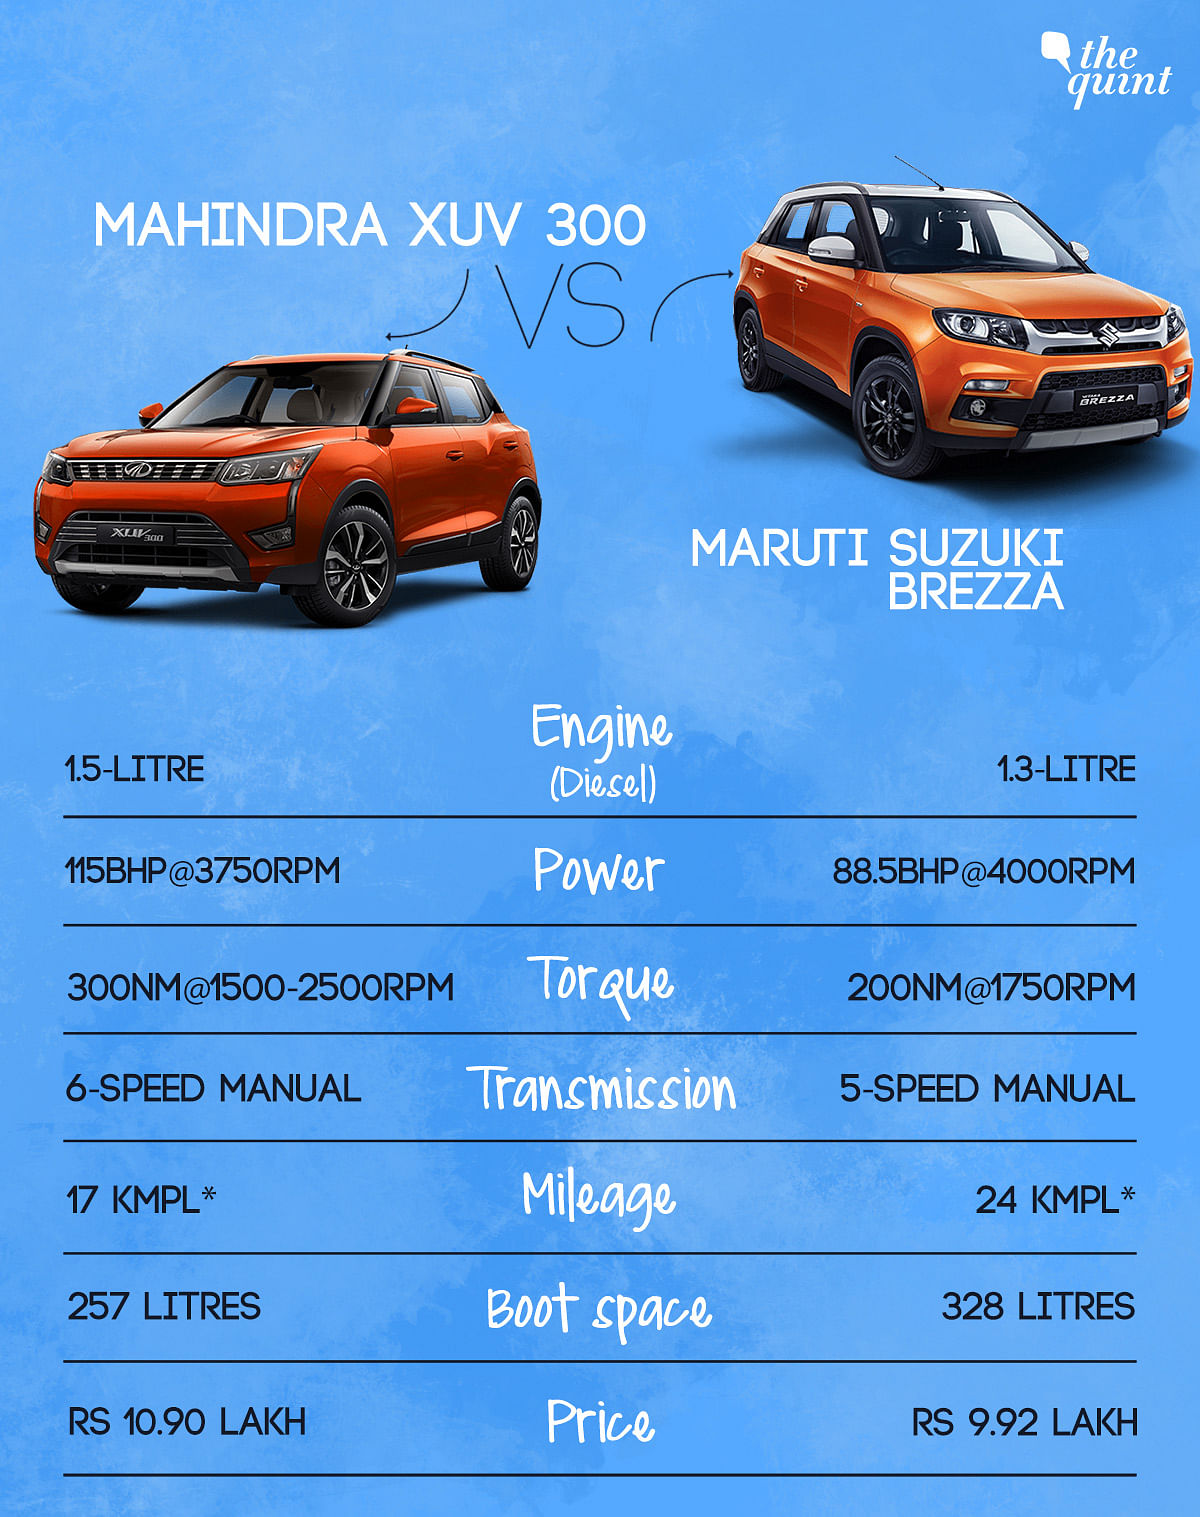 Mahindra XUV300 vs the Maruti Suzuki Brezza. Here we compare two compact SUVs in the sub-Rs 12 lakh category.